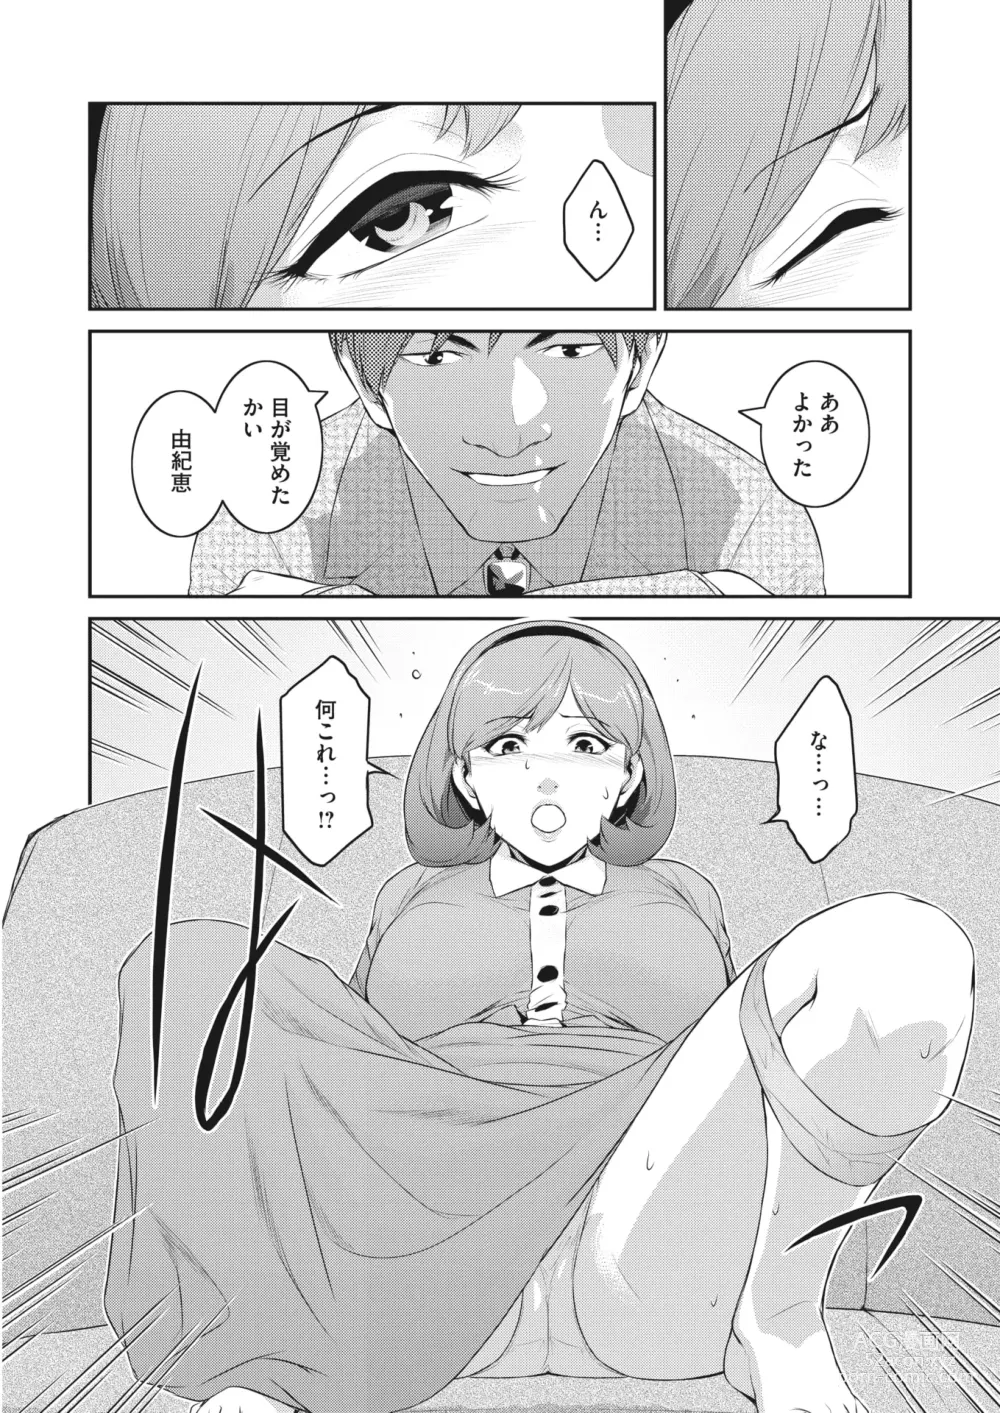 Page 6 of manga Affinity Ch.1-5